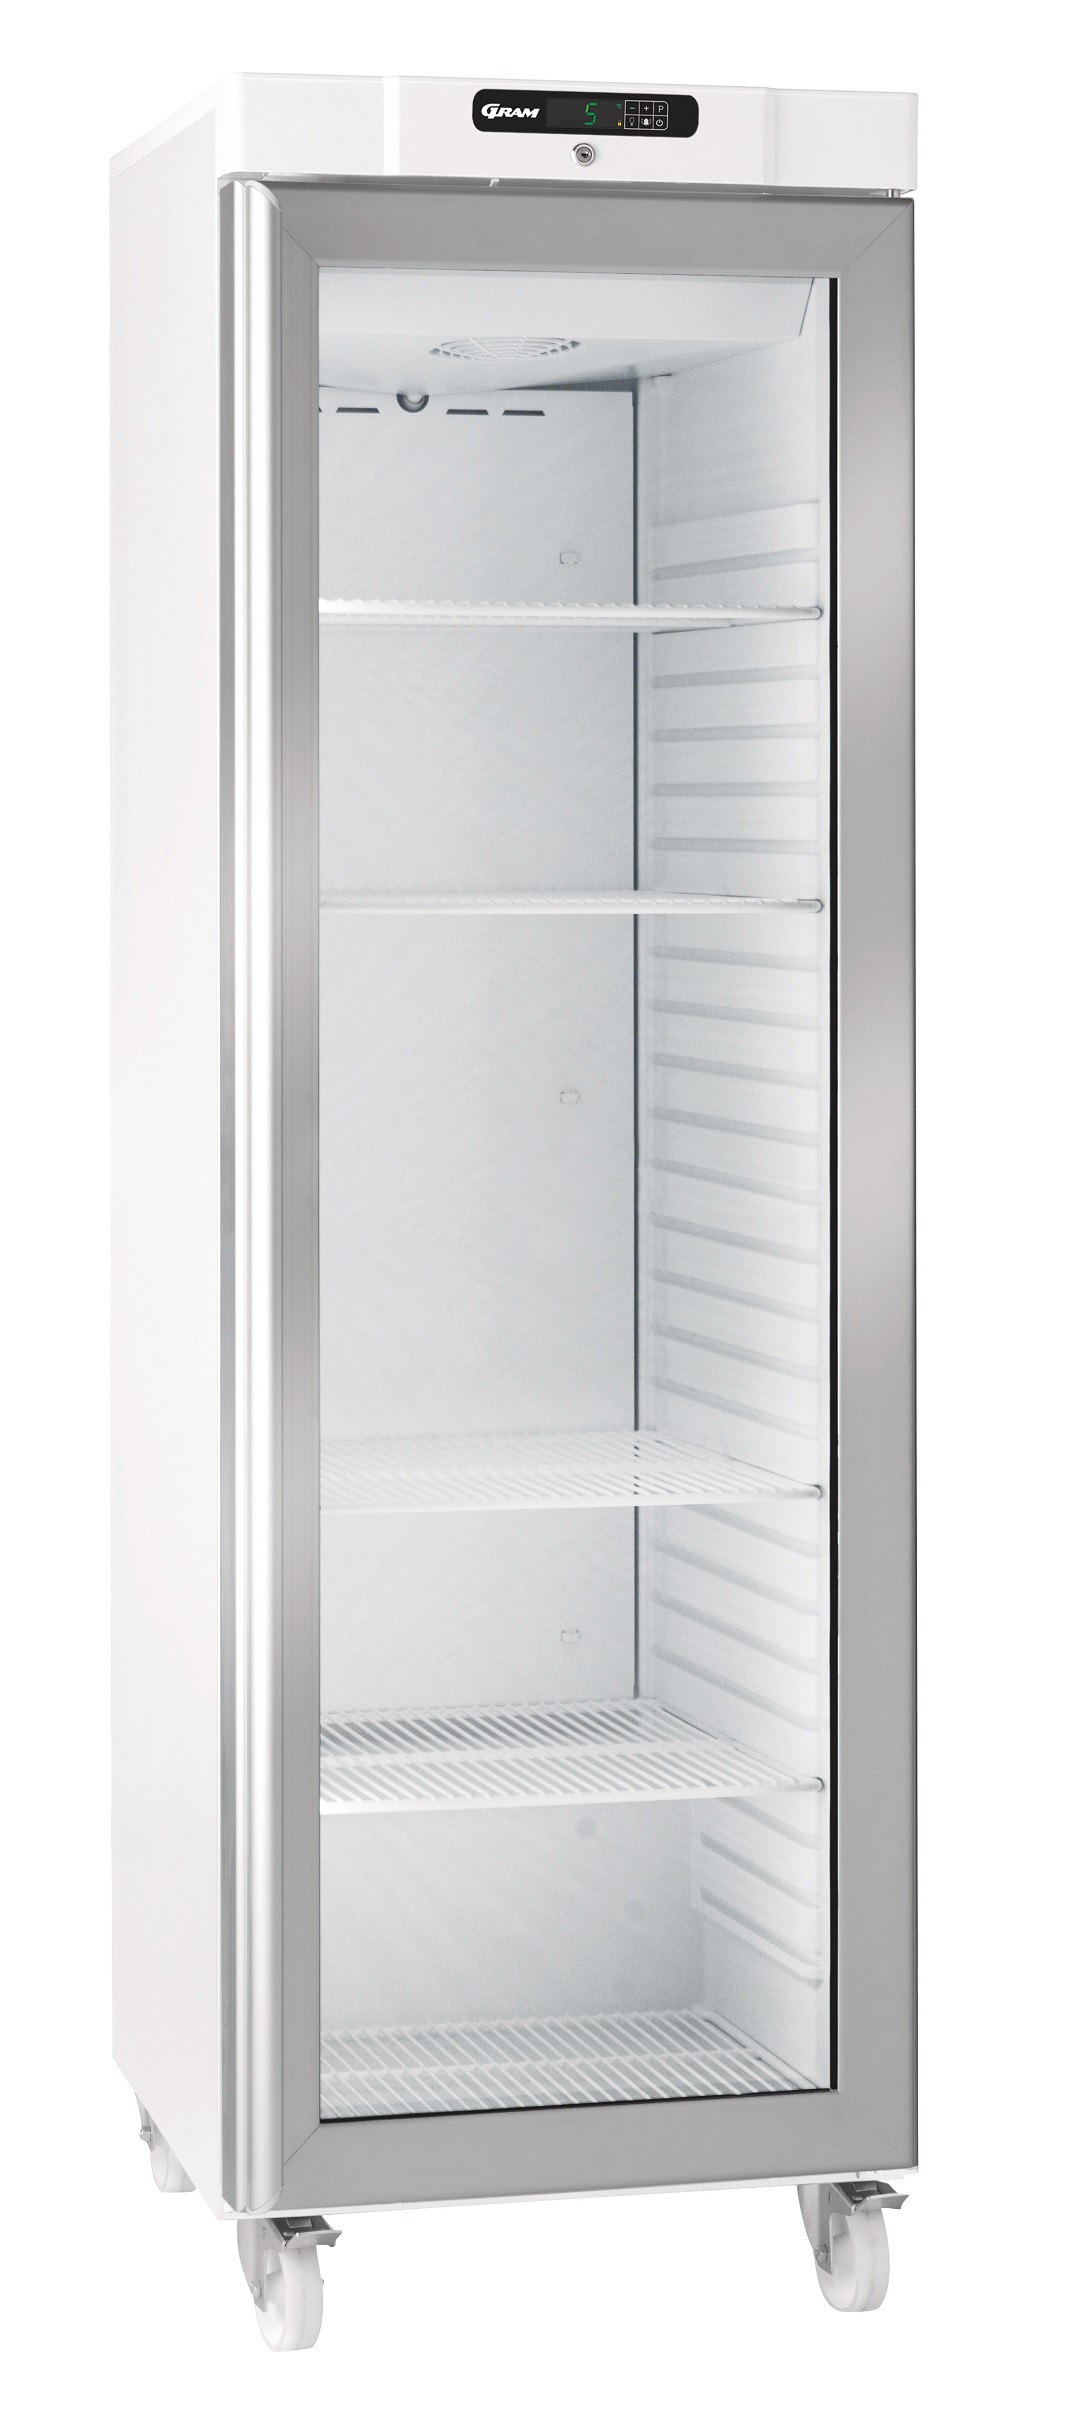 Gram Compact KG 420 L - C DR G U  Glass Door Refrigerator (164422030)